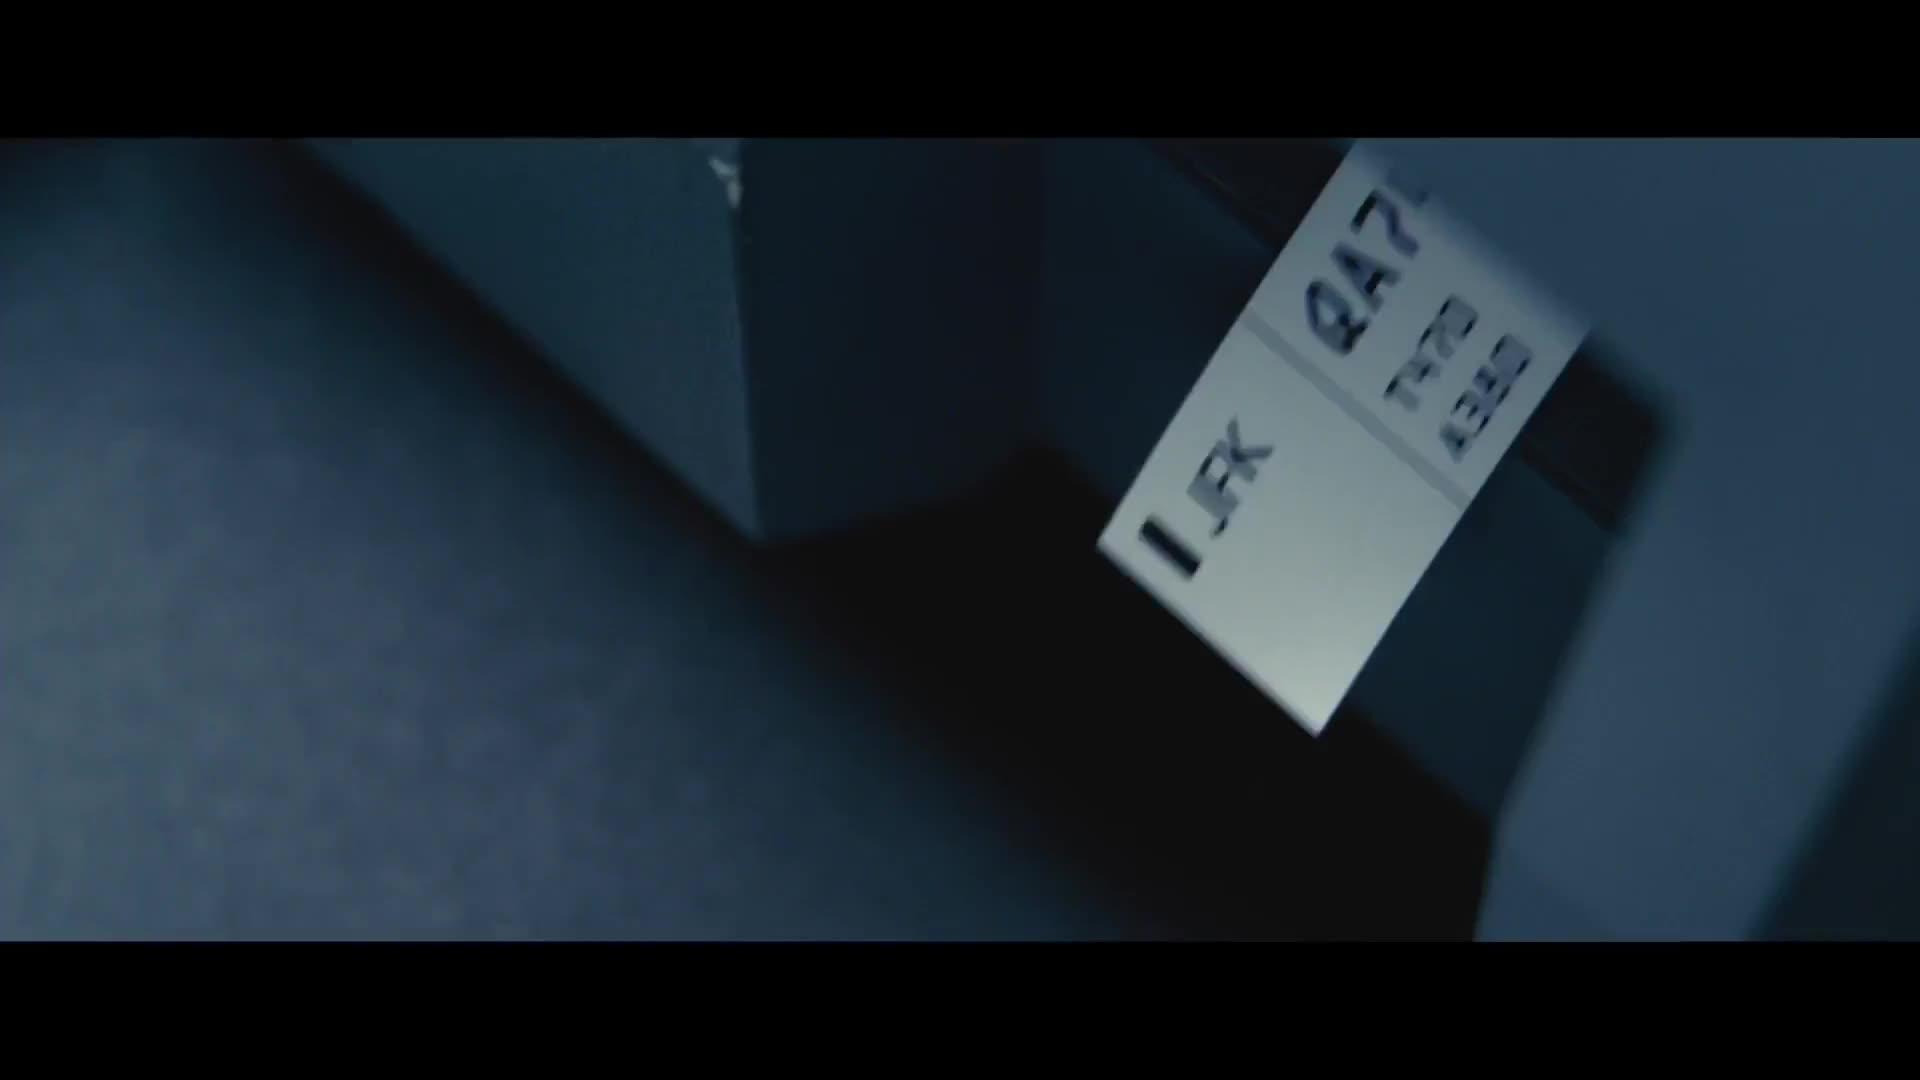 2:22: Trailer